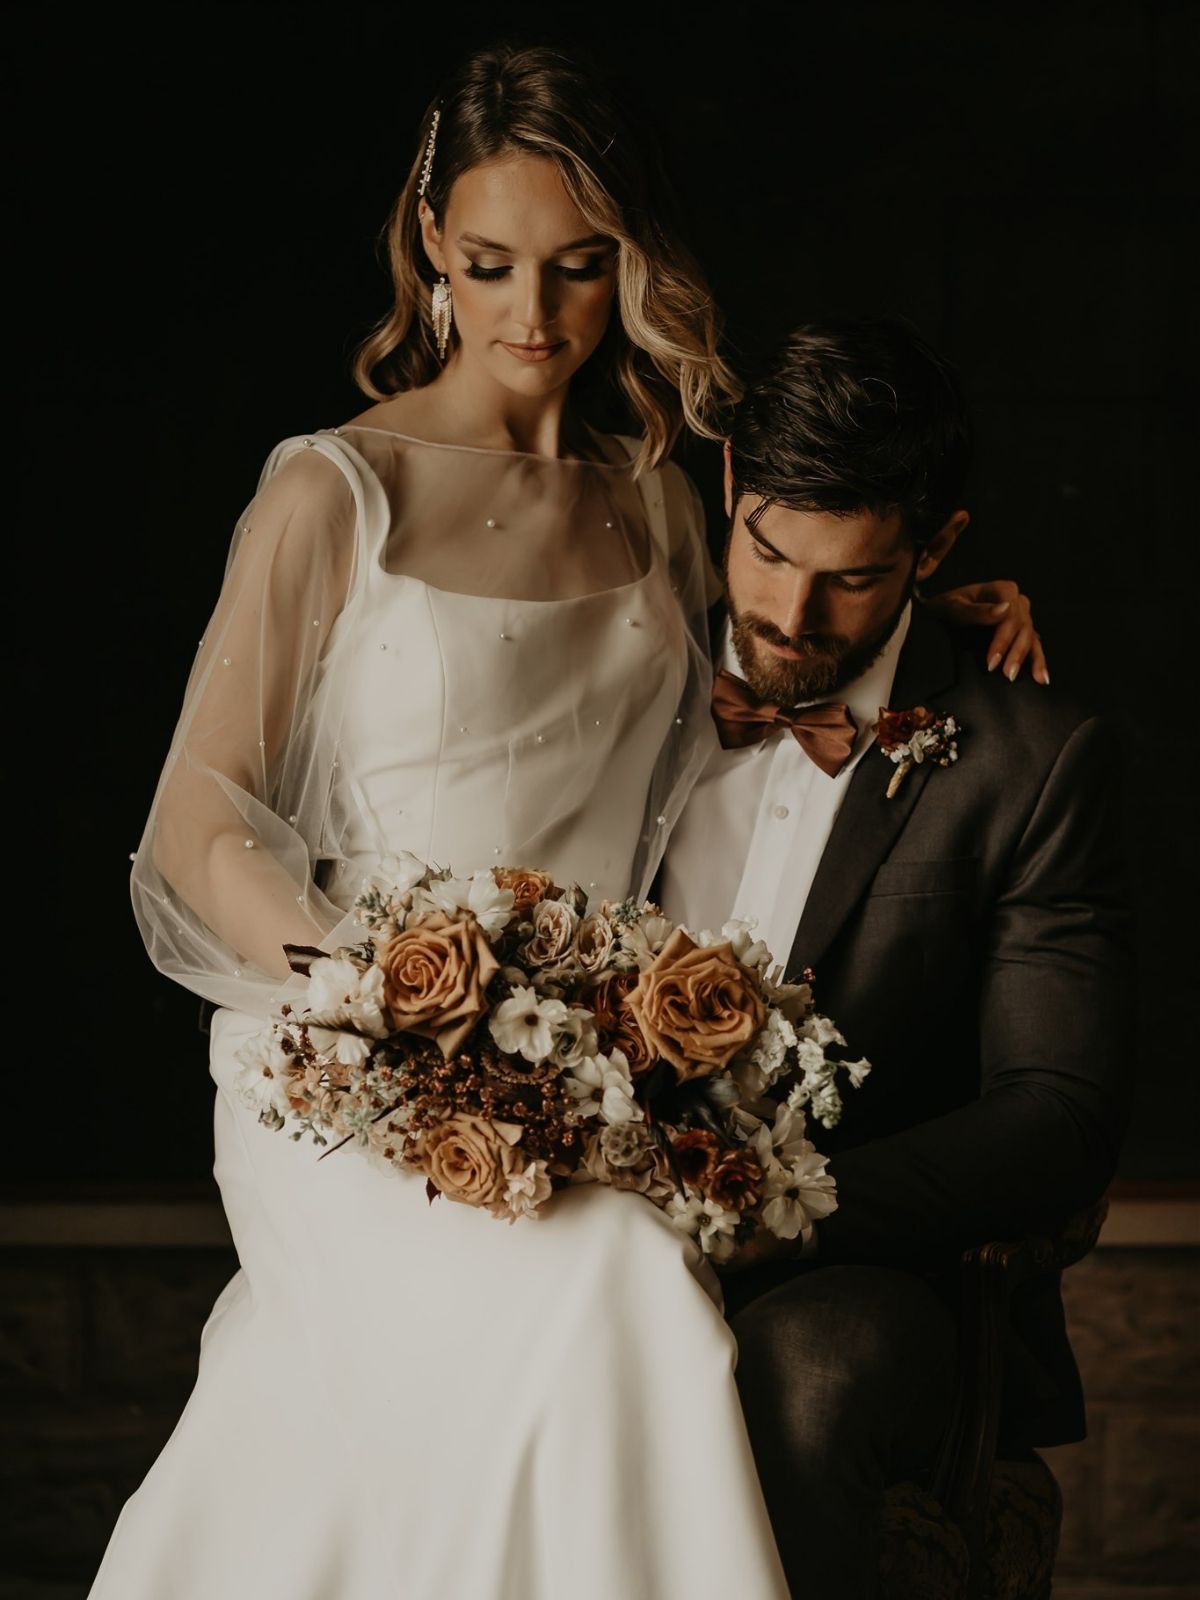 Erin McLarty - Eden's Echo - interview on Thursd - aviation wedding shoot - bride and bouquet